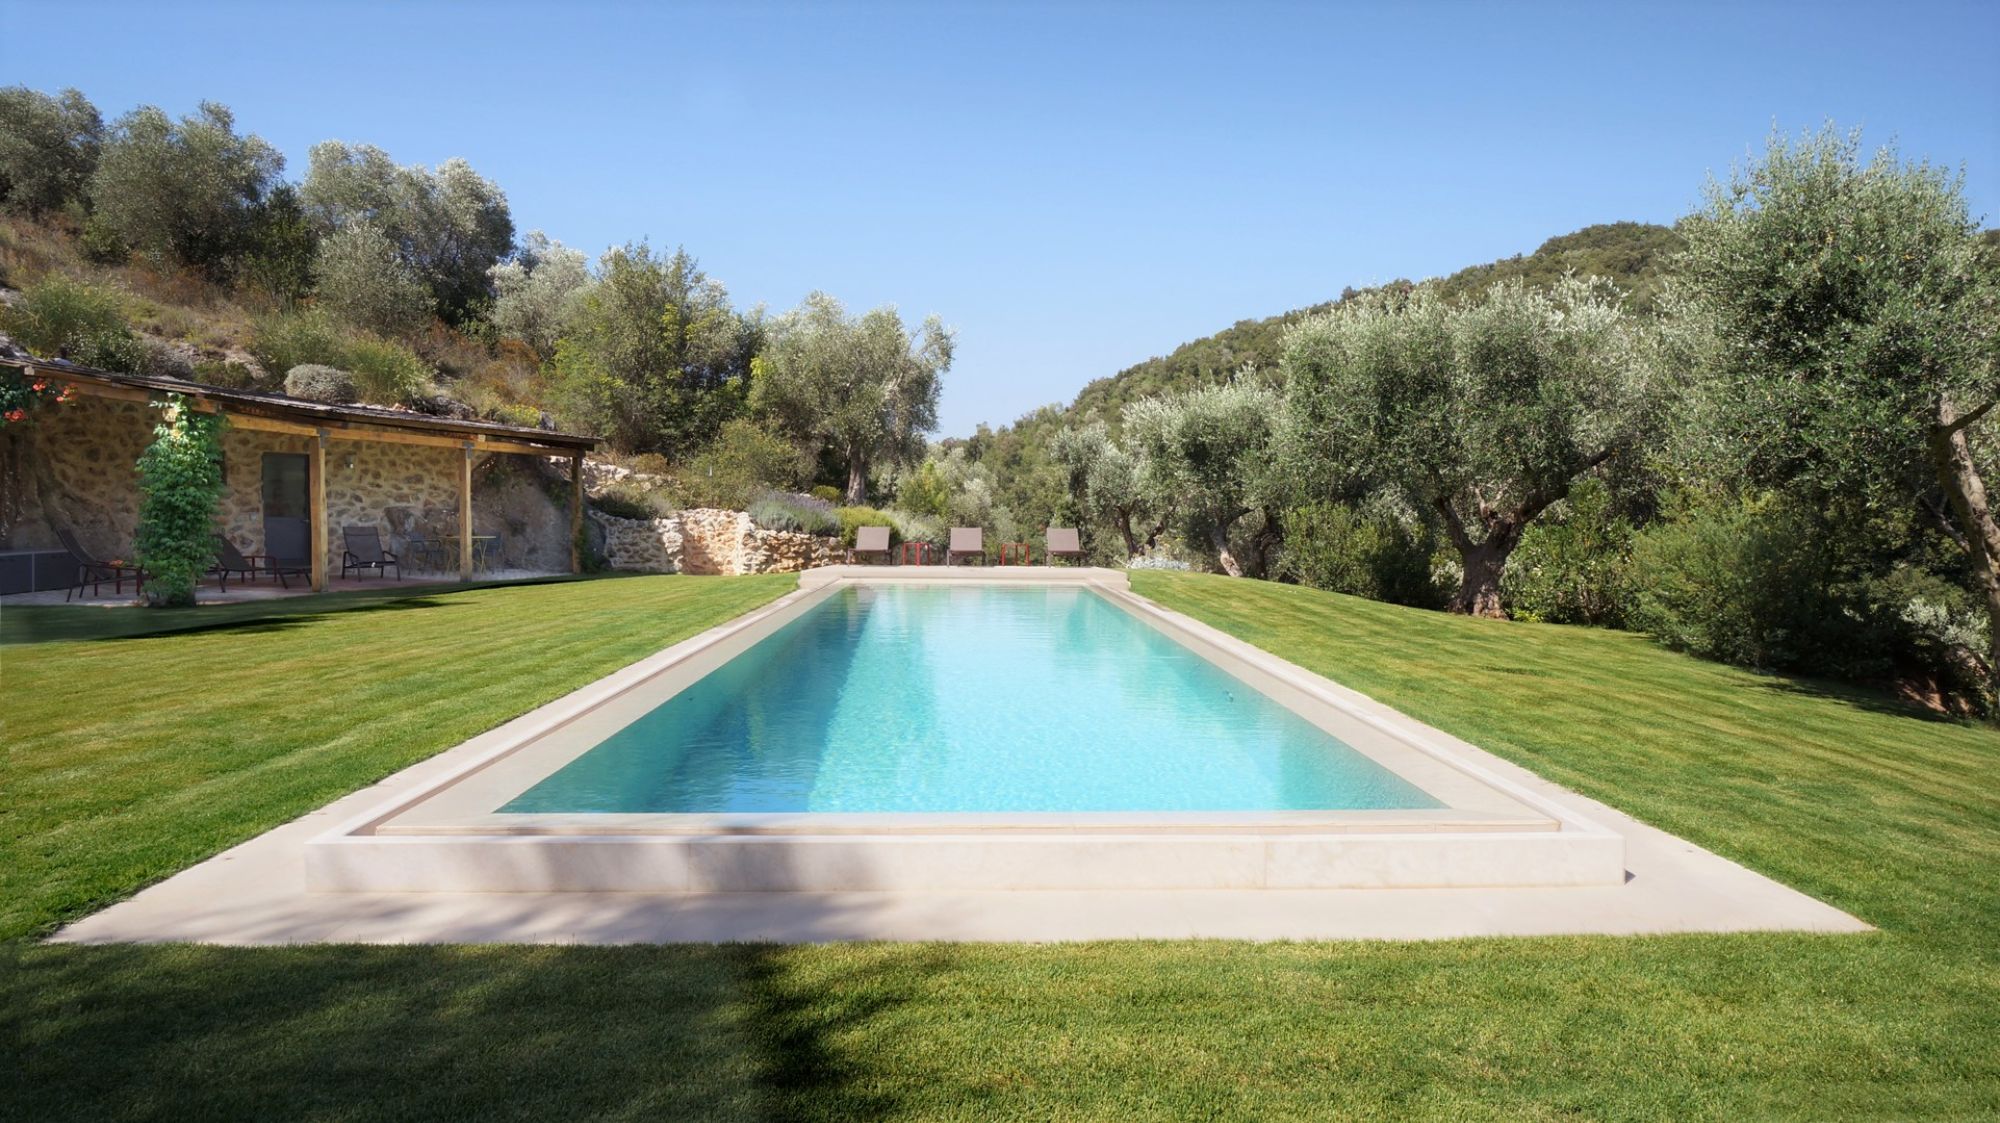 Pool and garden at Villa Argentario